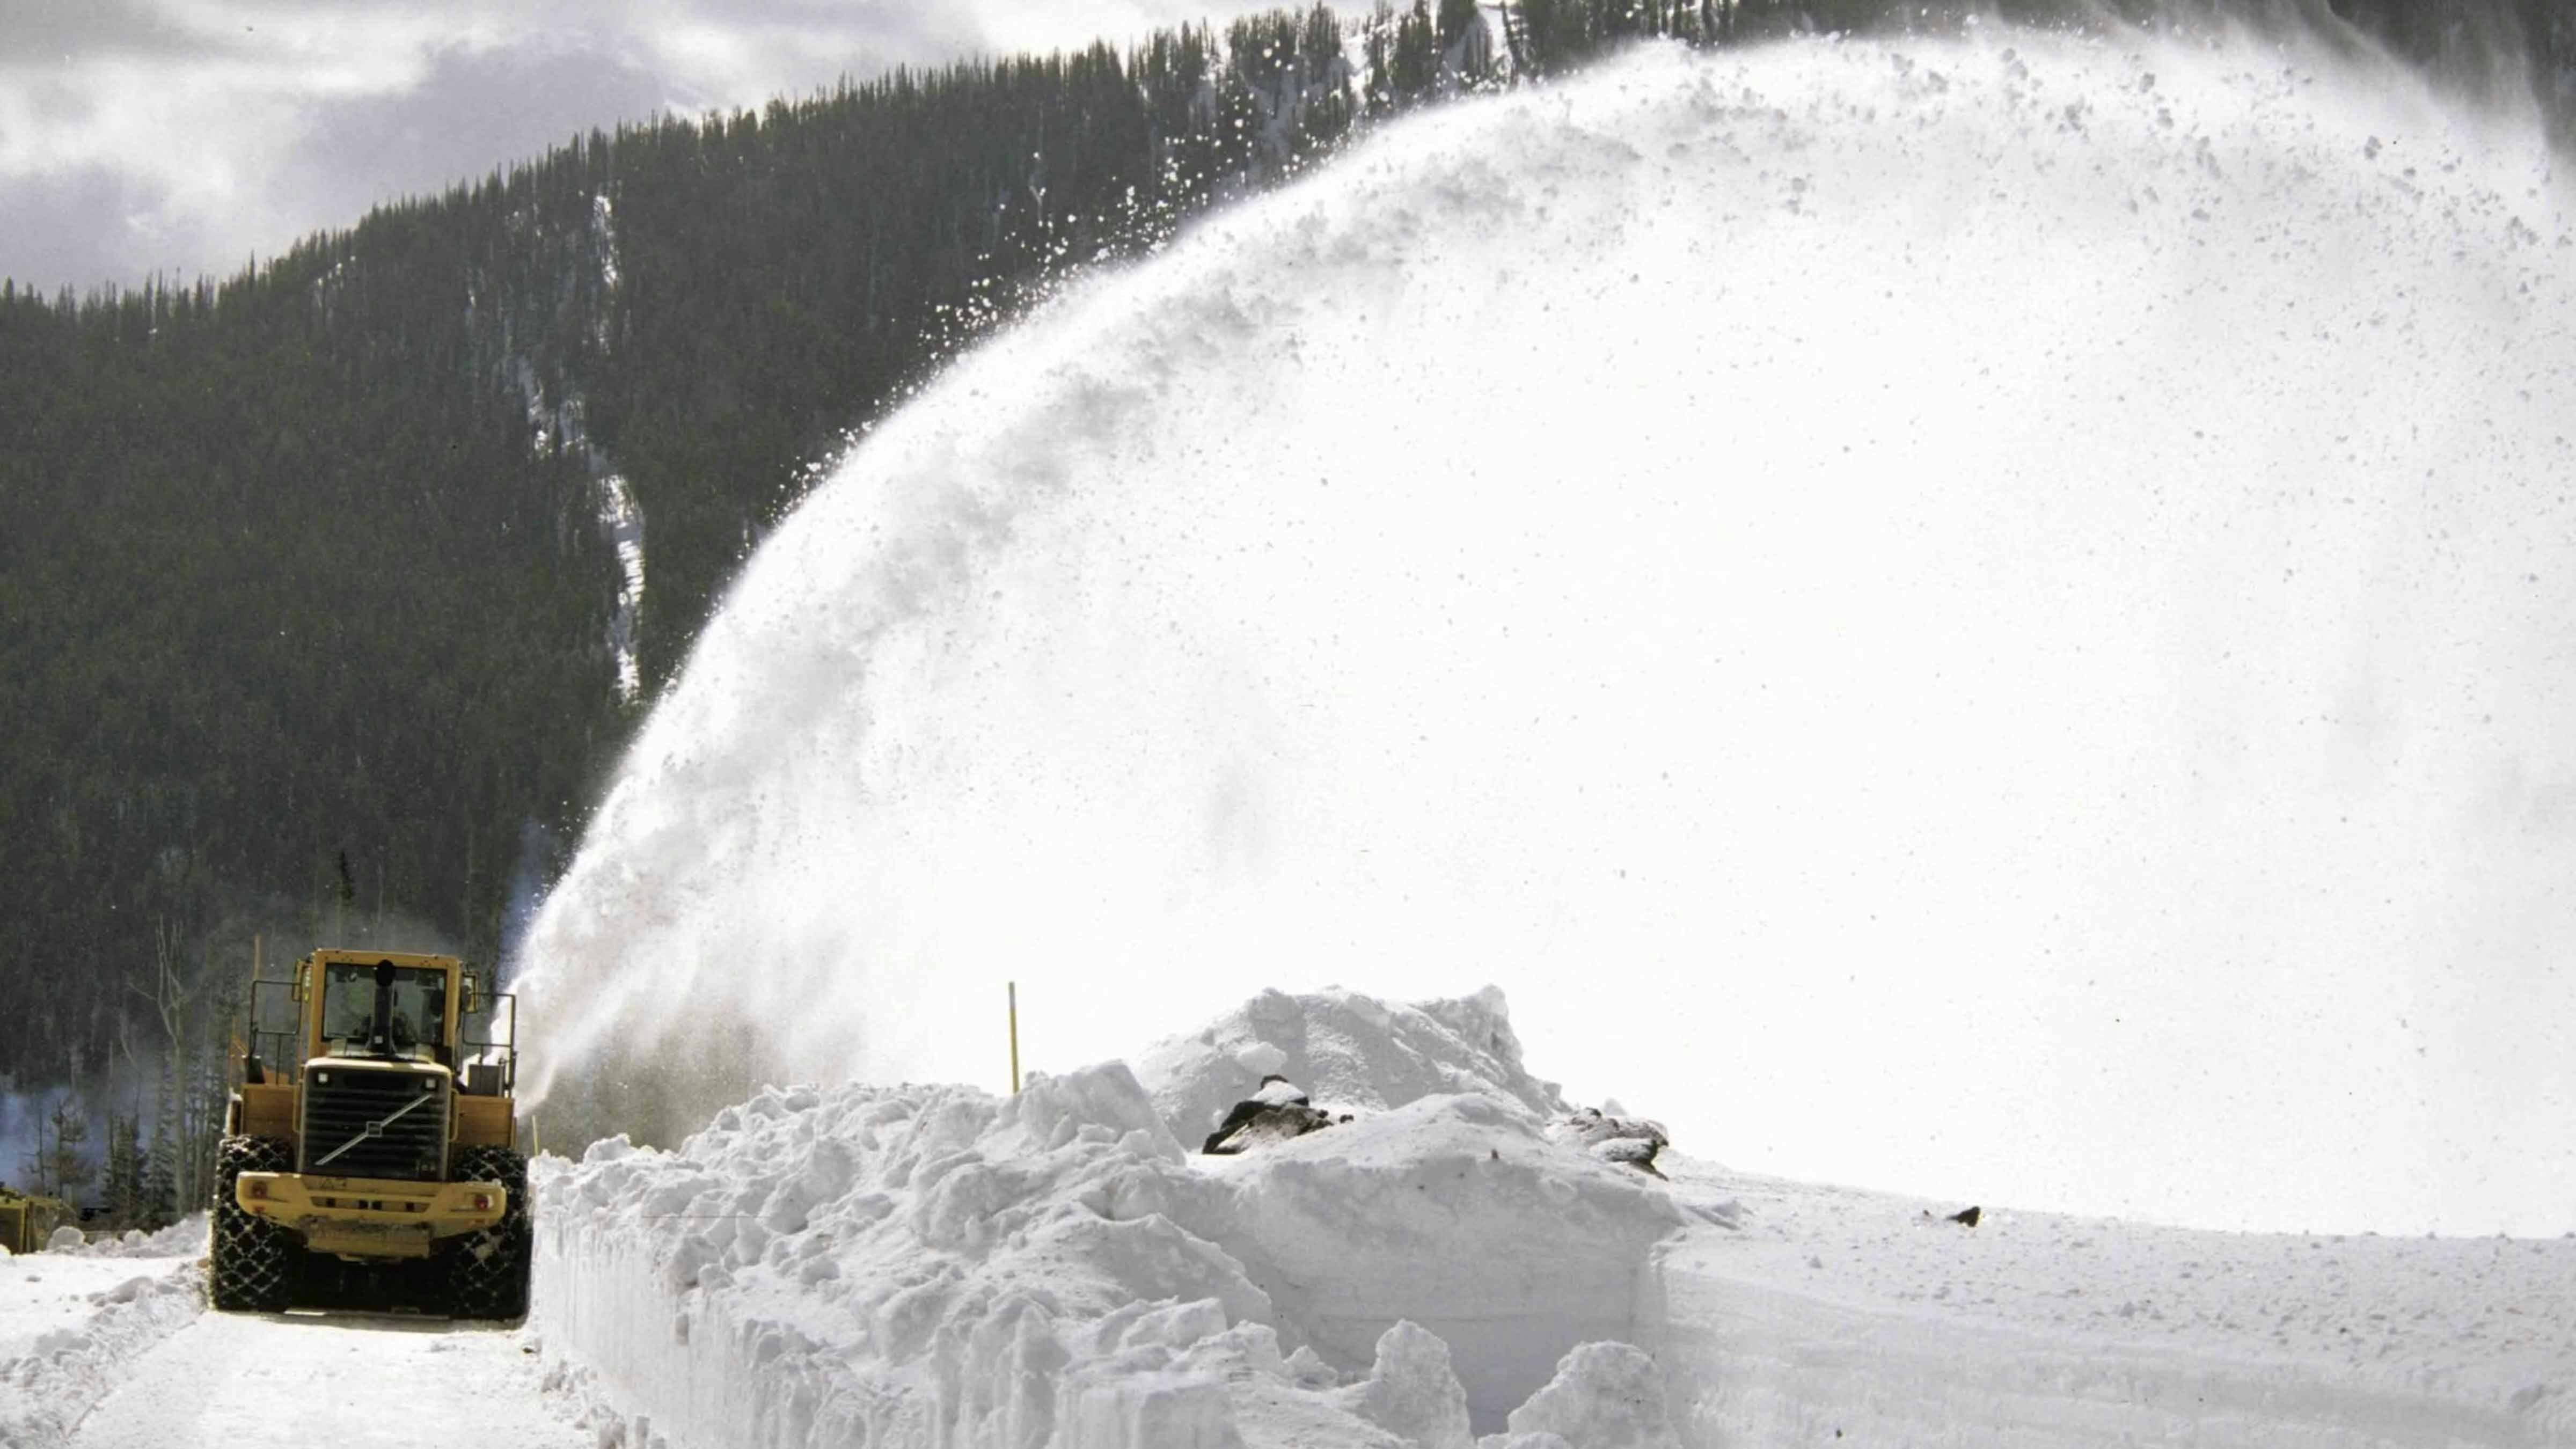 Yellowstone snow blower 4 5 23